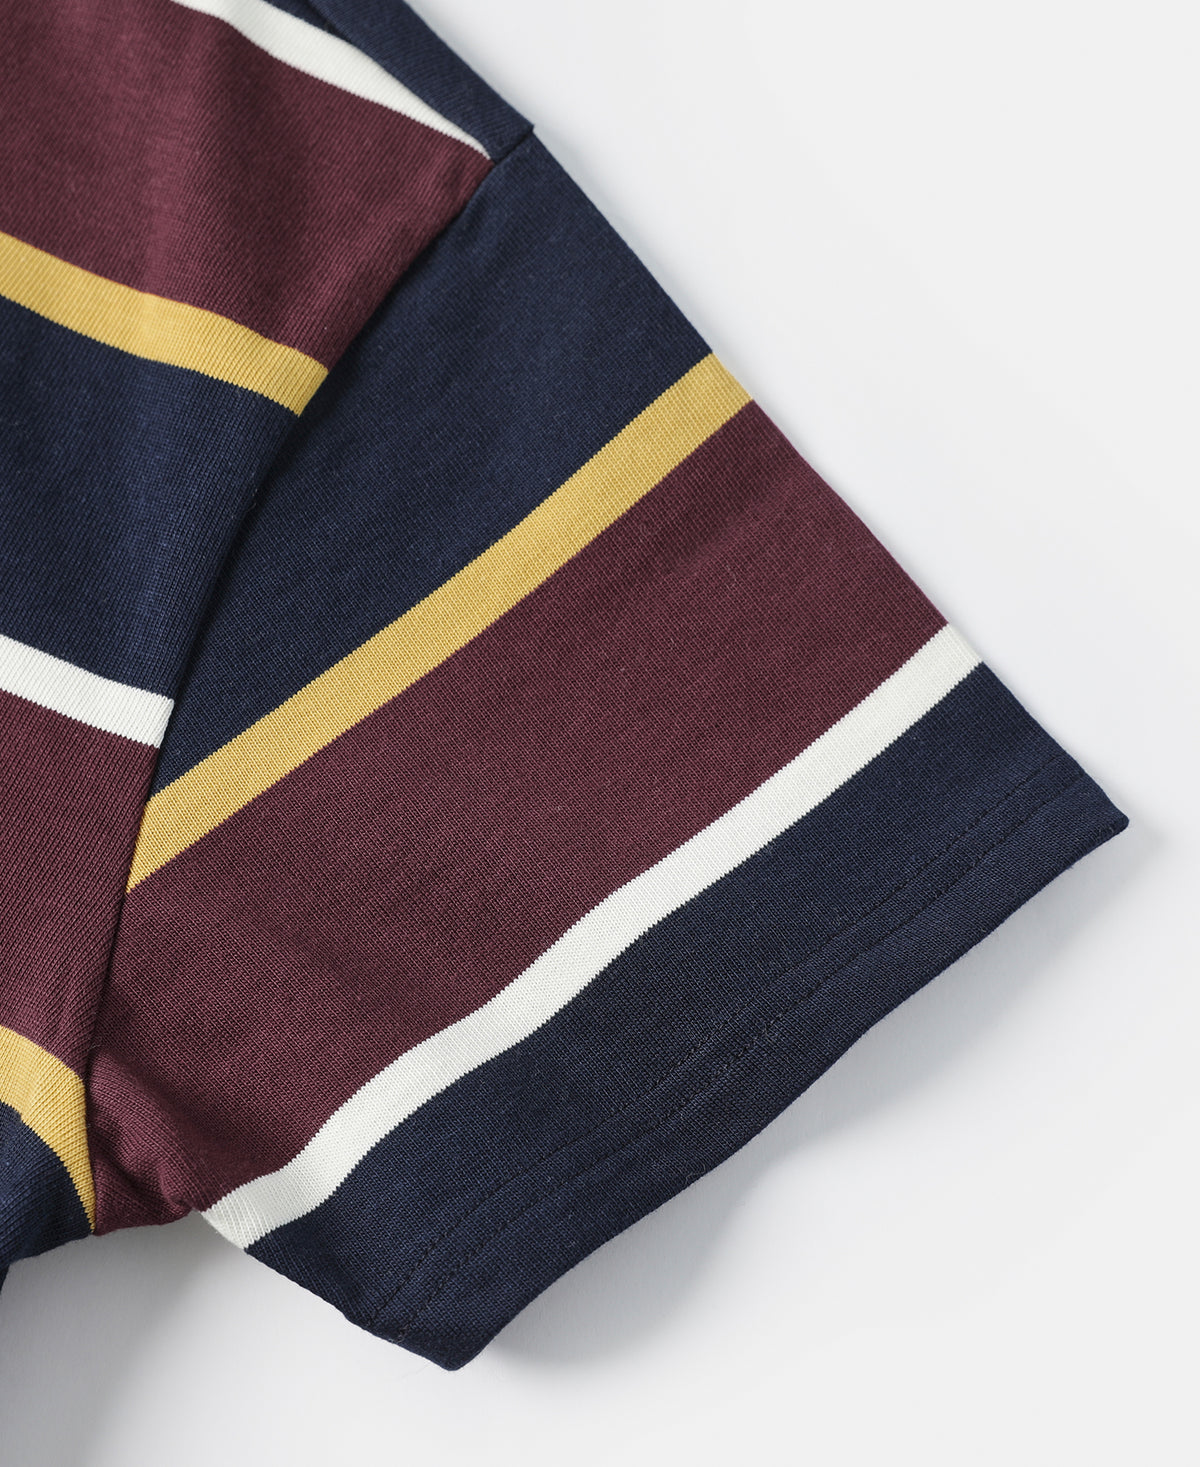 9.8 oz IVY Style Striped T-Shirt - Burgundy Red/Navy